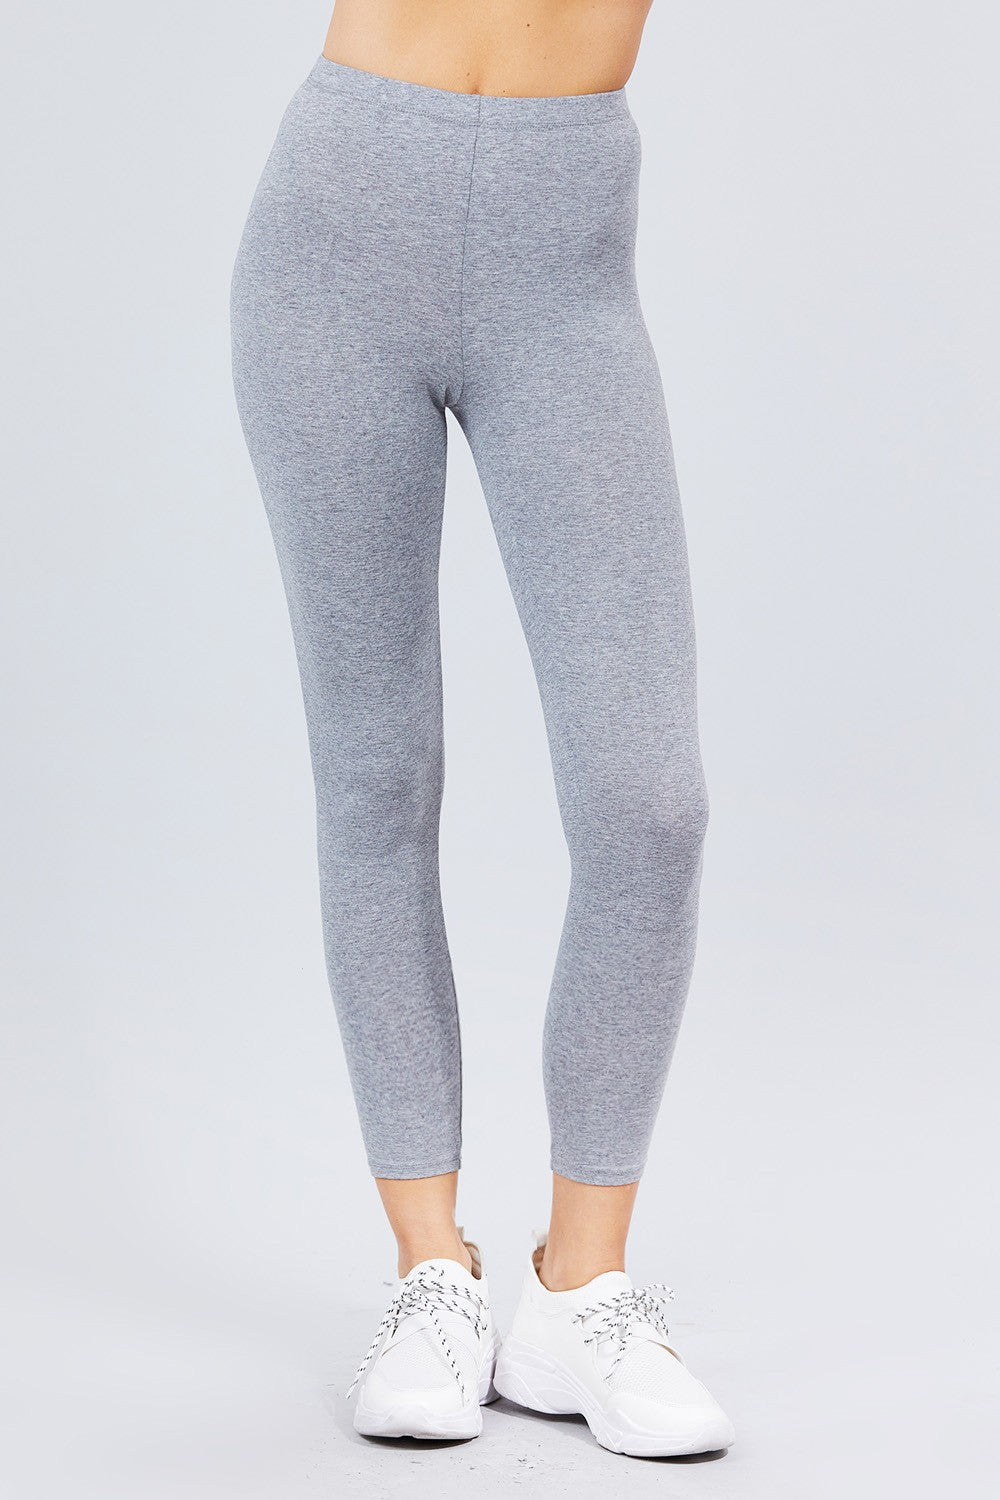 Cotton Spandex Jersey Long - Heather Grey / S Pants Girl Code